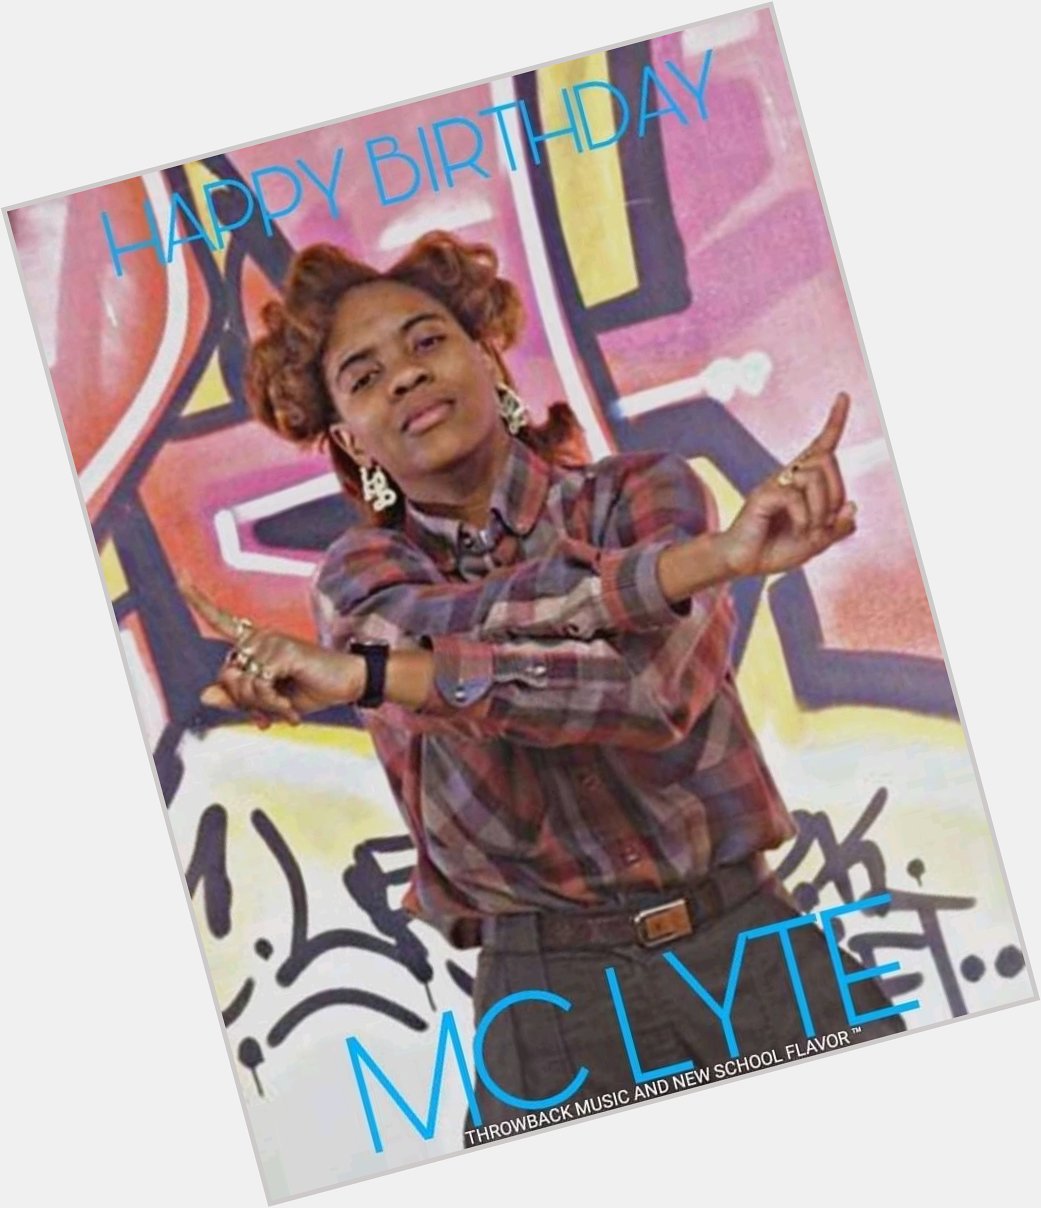 Happy birthday to The legendary Mc lyte 